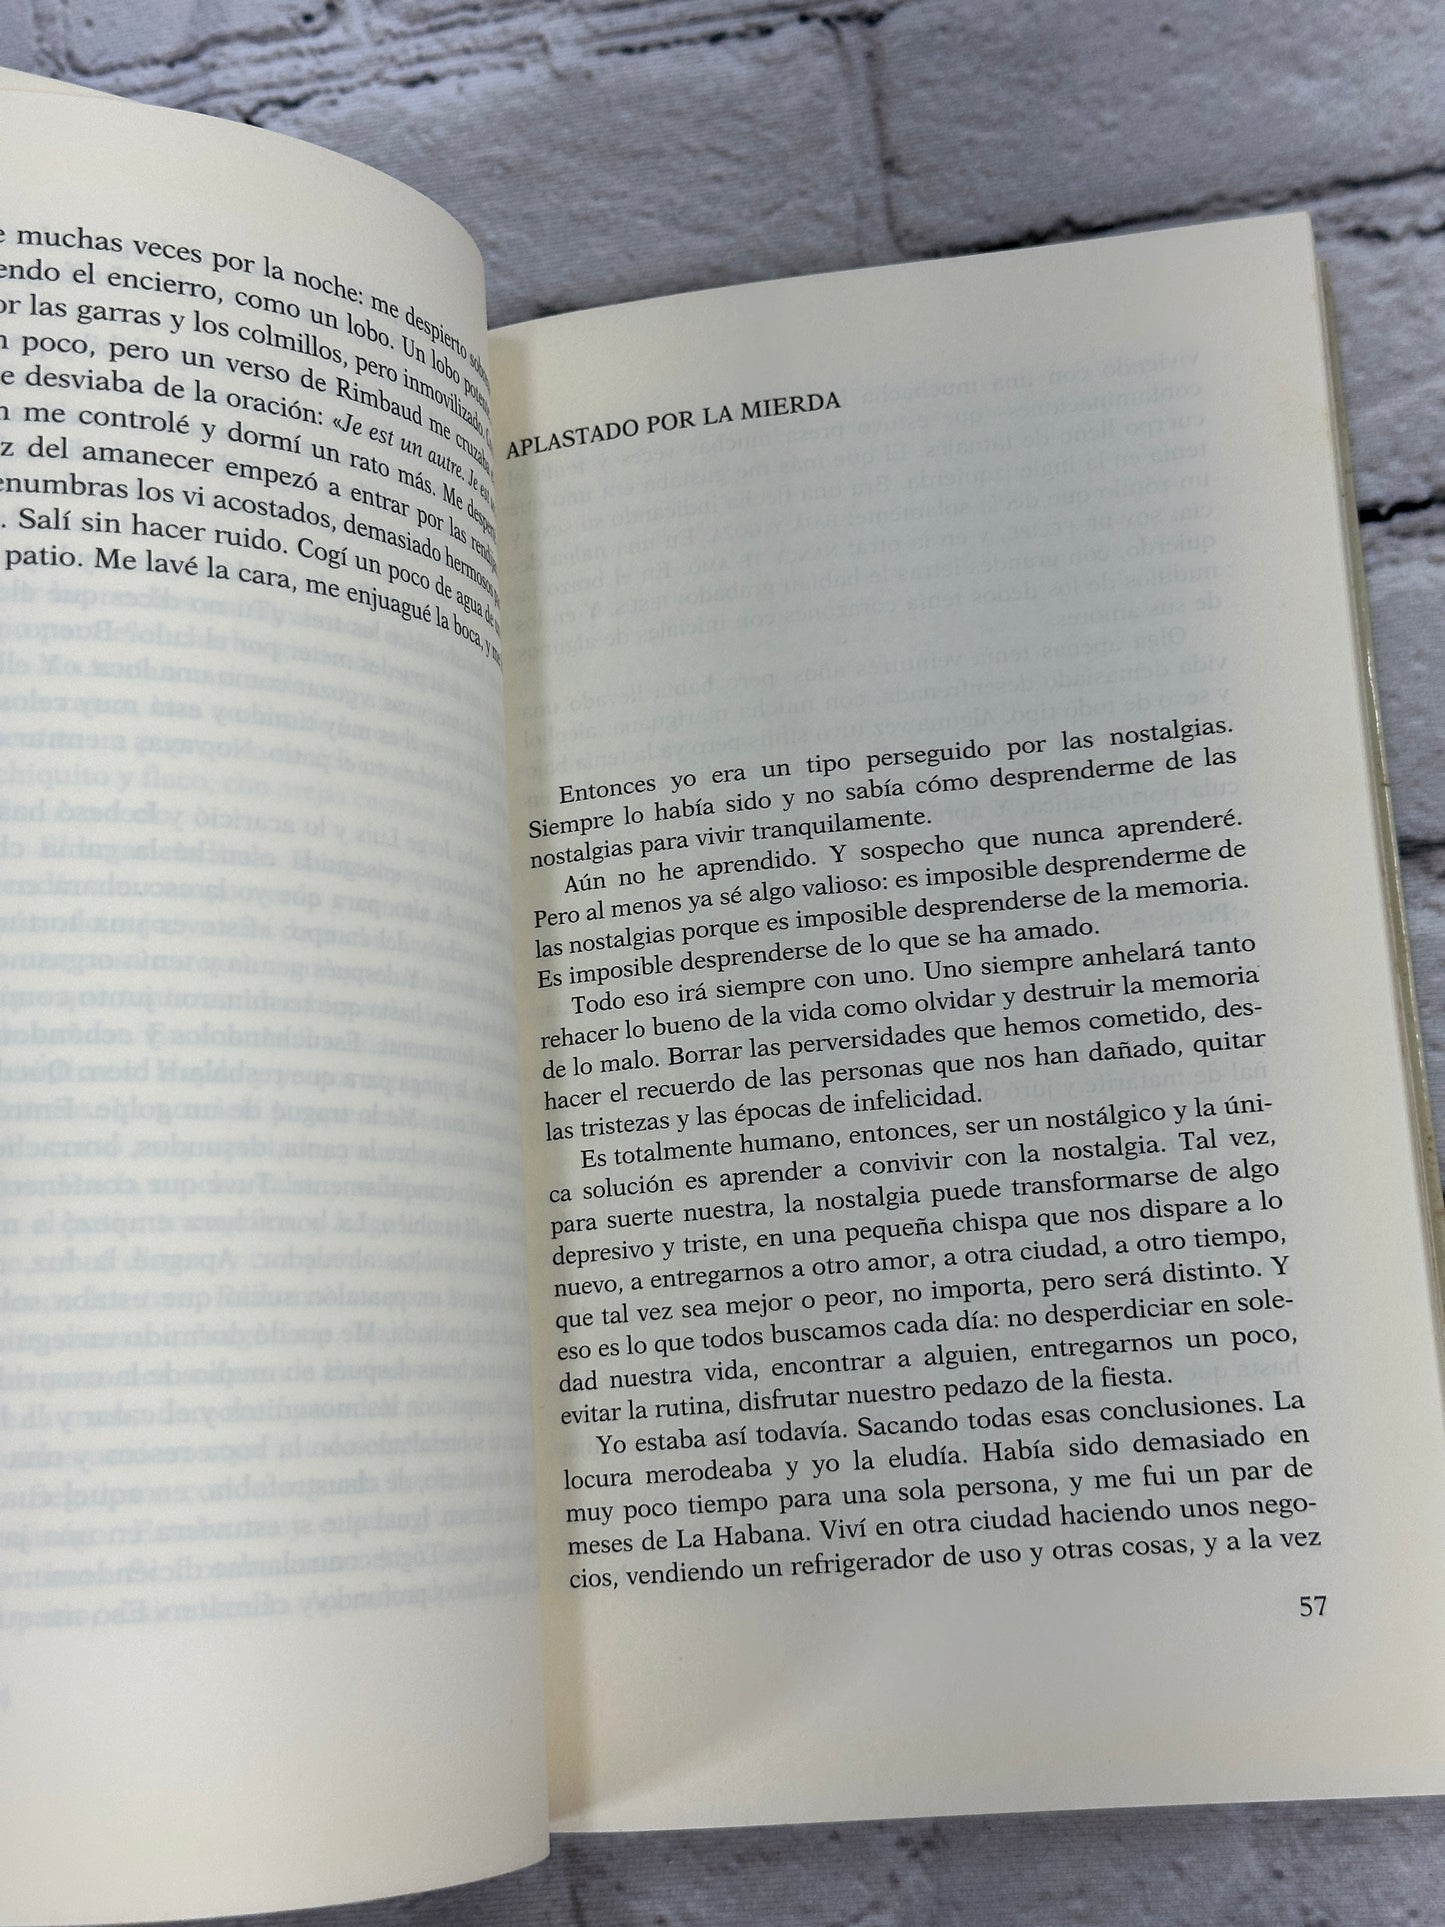 Trilogia Sucia de la Habana By Pedro Juan Gutierrez [1999 · 4th Edition]